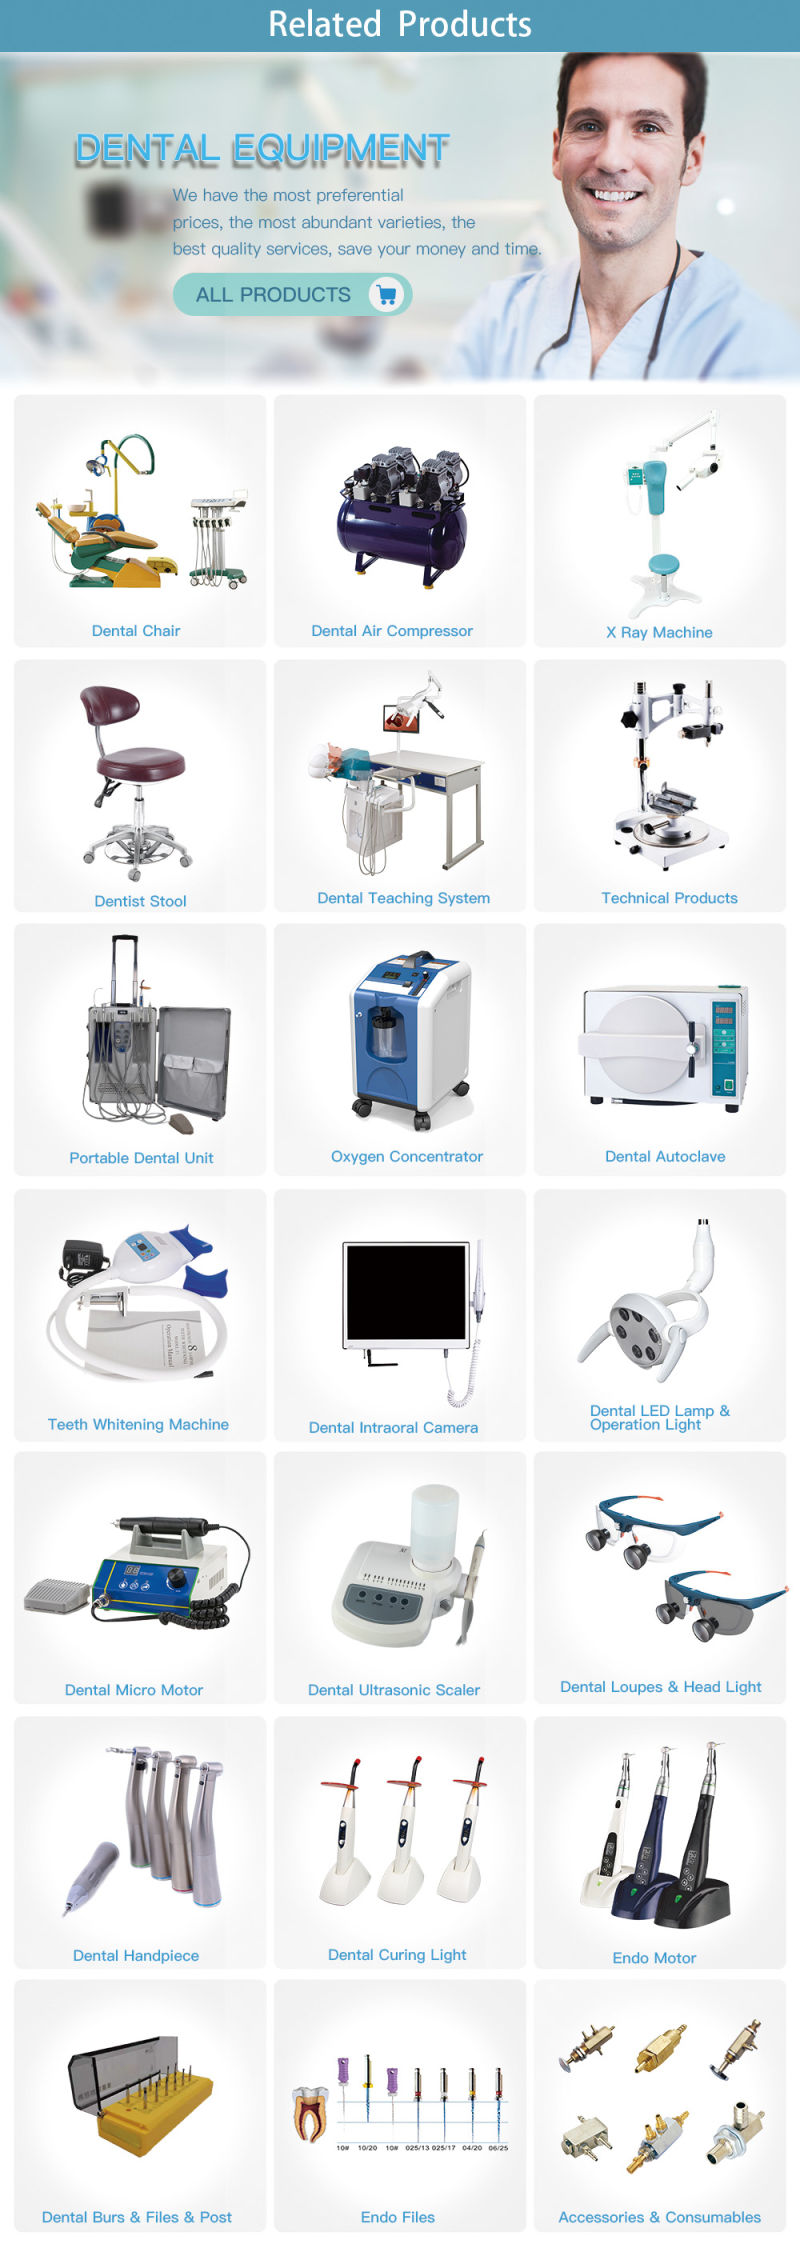 X Ray Machine Dental Portable Good Quality Mini X-ray Machine Unit Medical Equipment